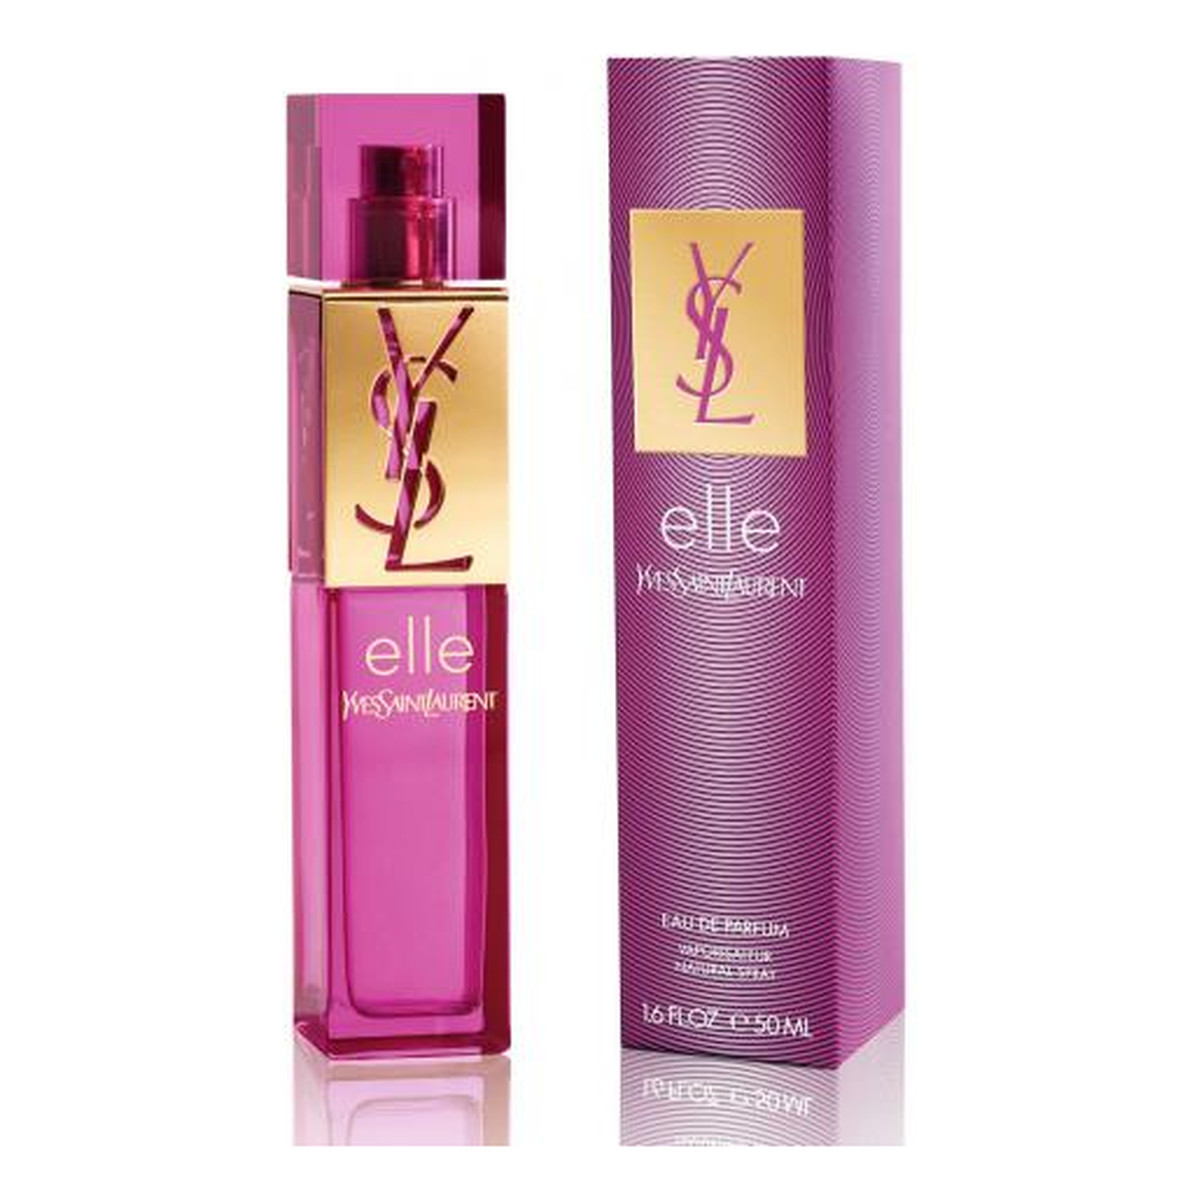 Yves Saint Laurent Elle woda perfumowana dla kobiet 50ml